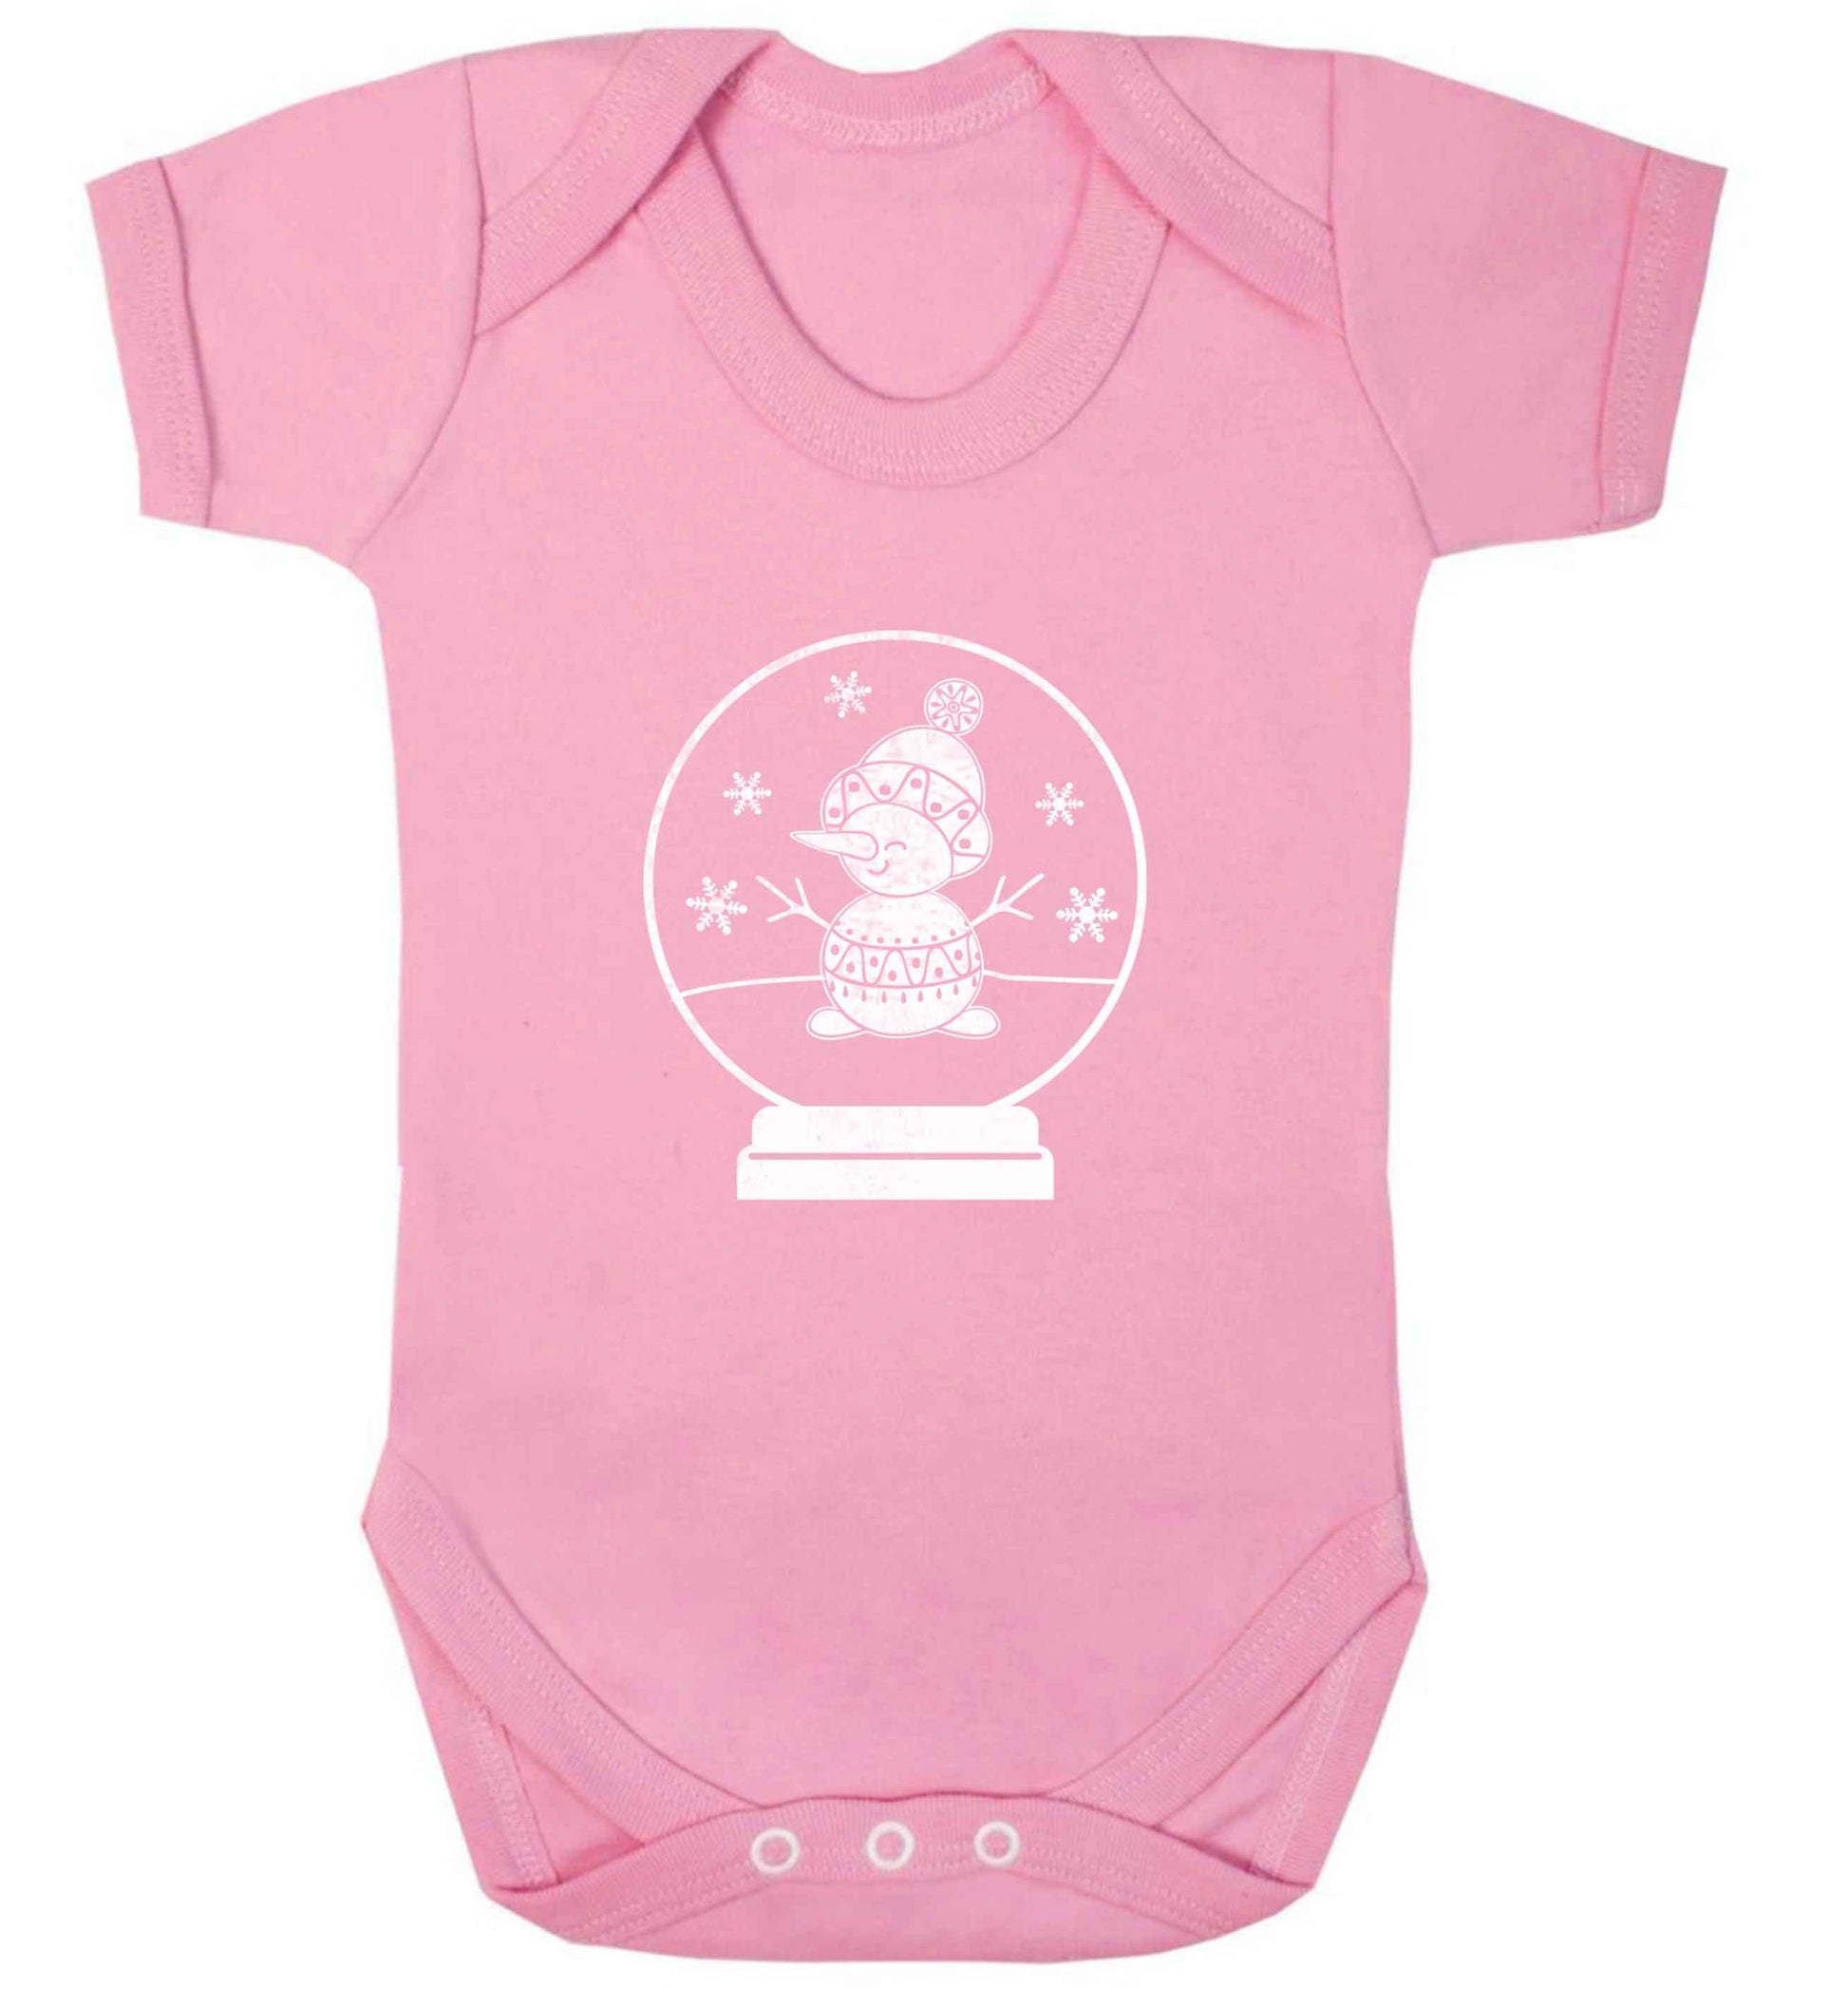 Snowman Snowglobe baby vest pale pink 18-24 months